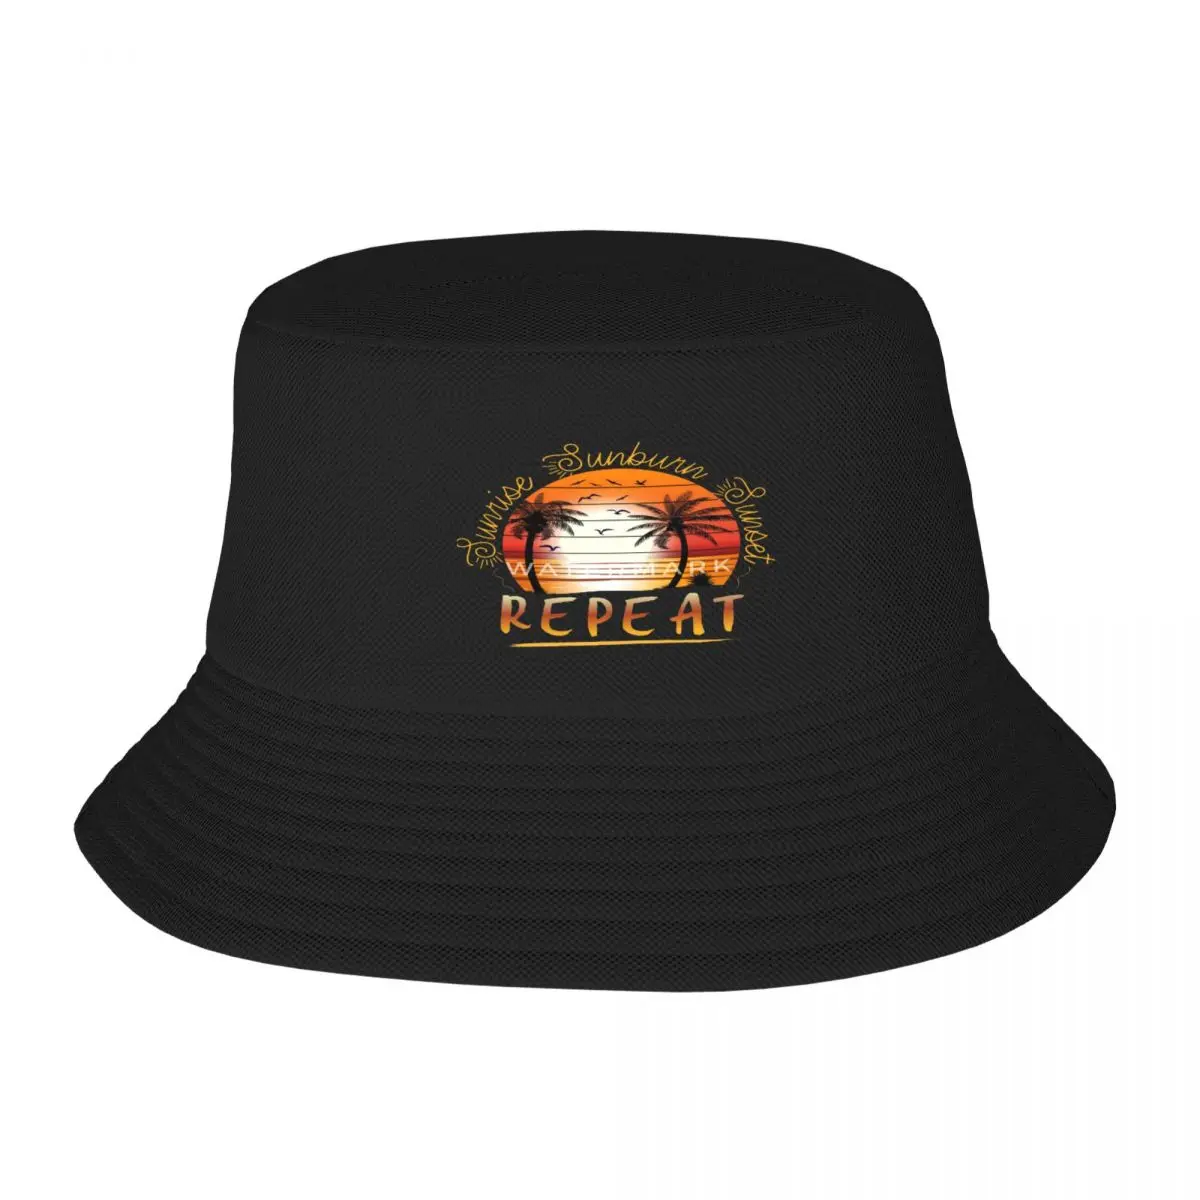 

Sunrise Sunburn Sunset Repeat Fisherman's Hat, Adult Cap Customizable Comfortable Foldable Cap Nice Gift